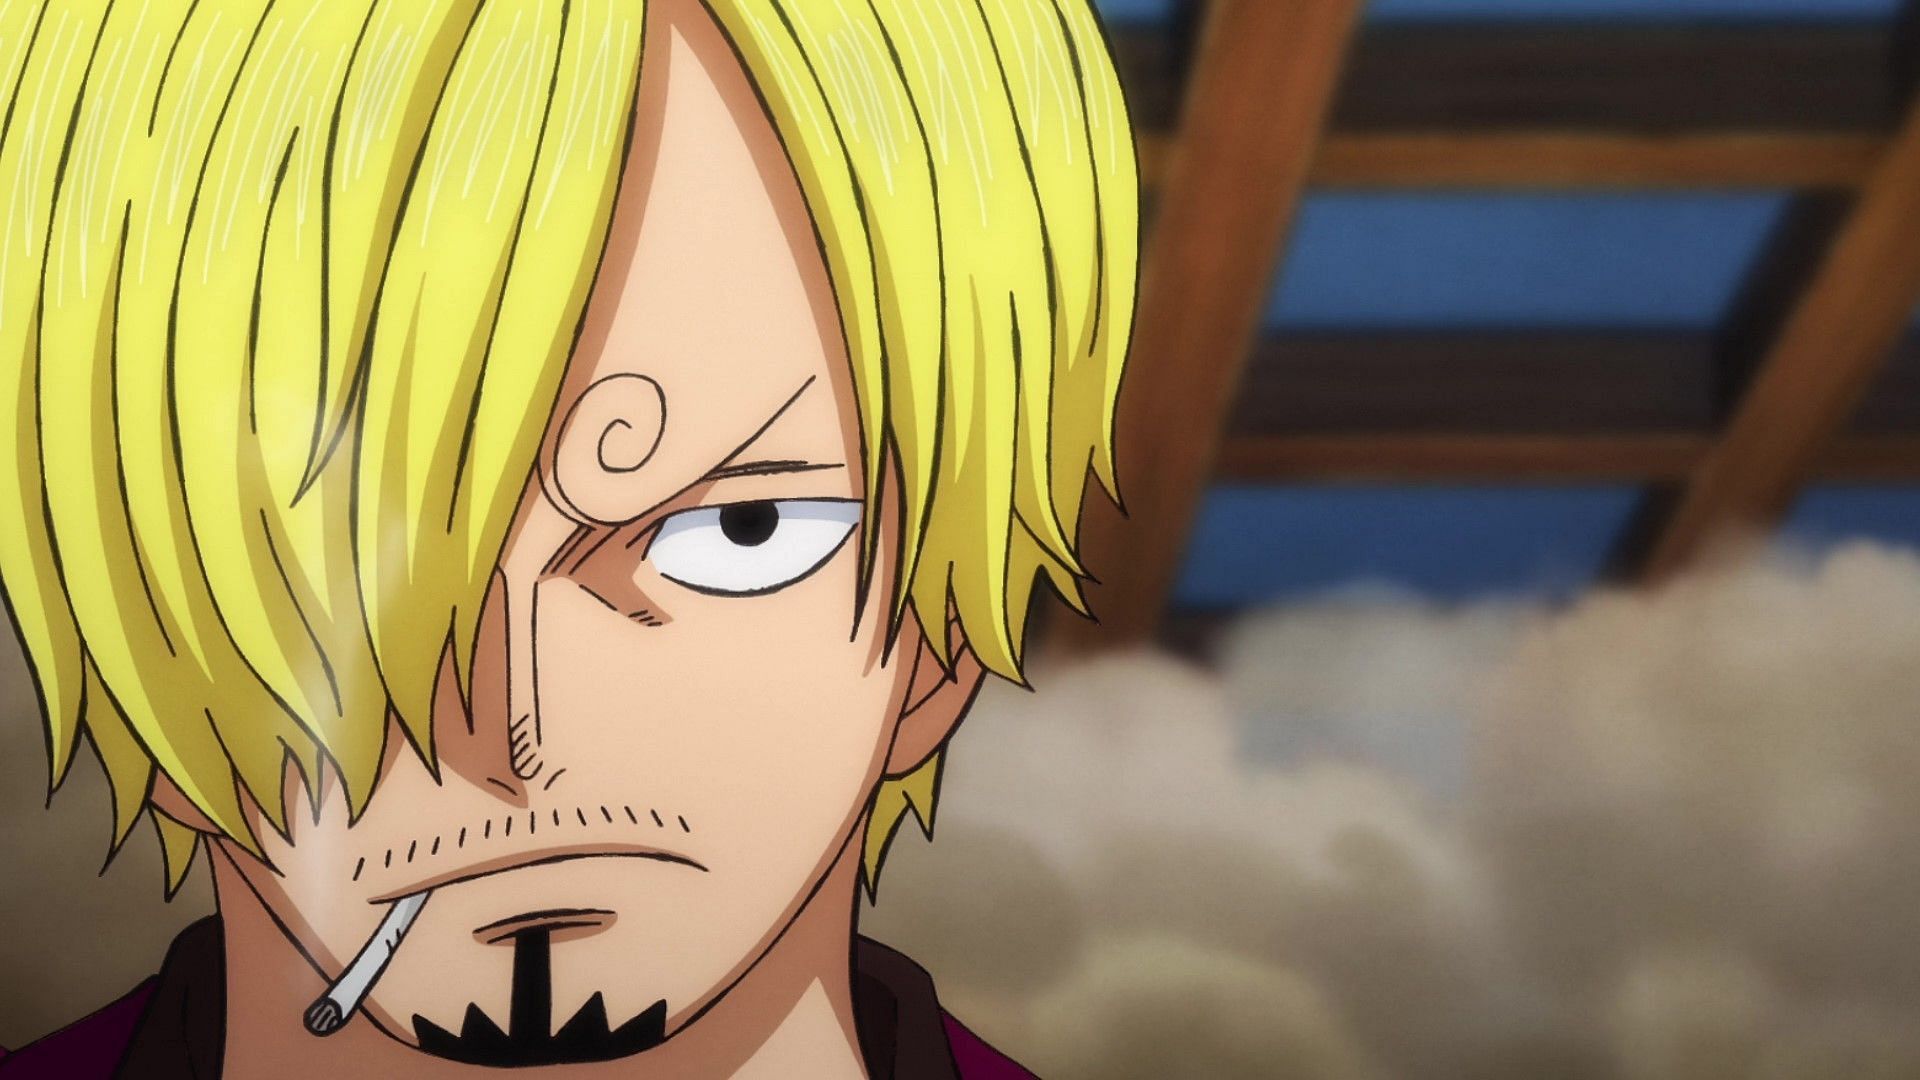 Sanji as seen in One Piece (Image via Toei Animation)